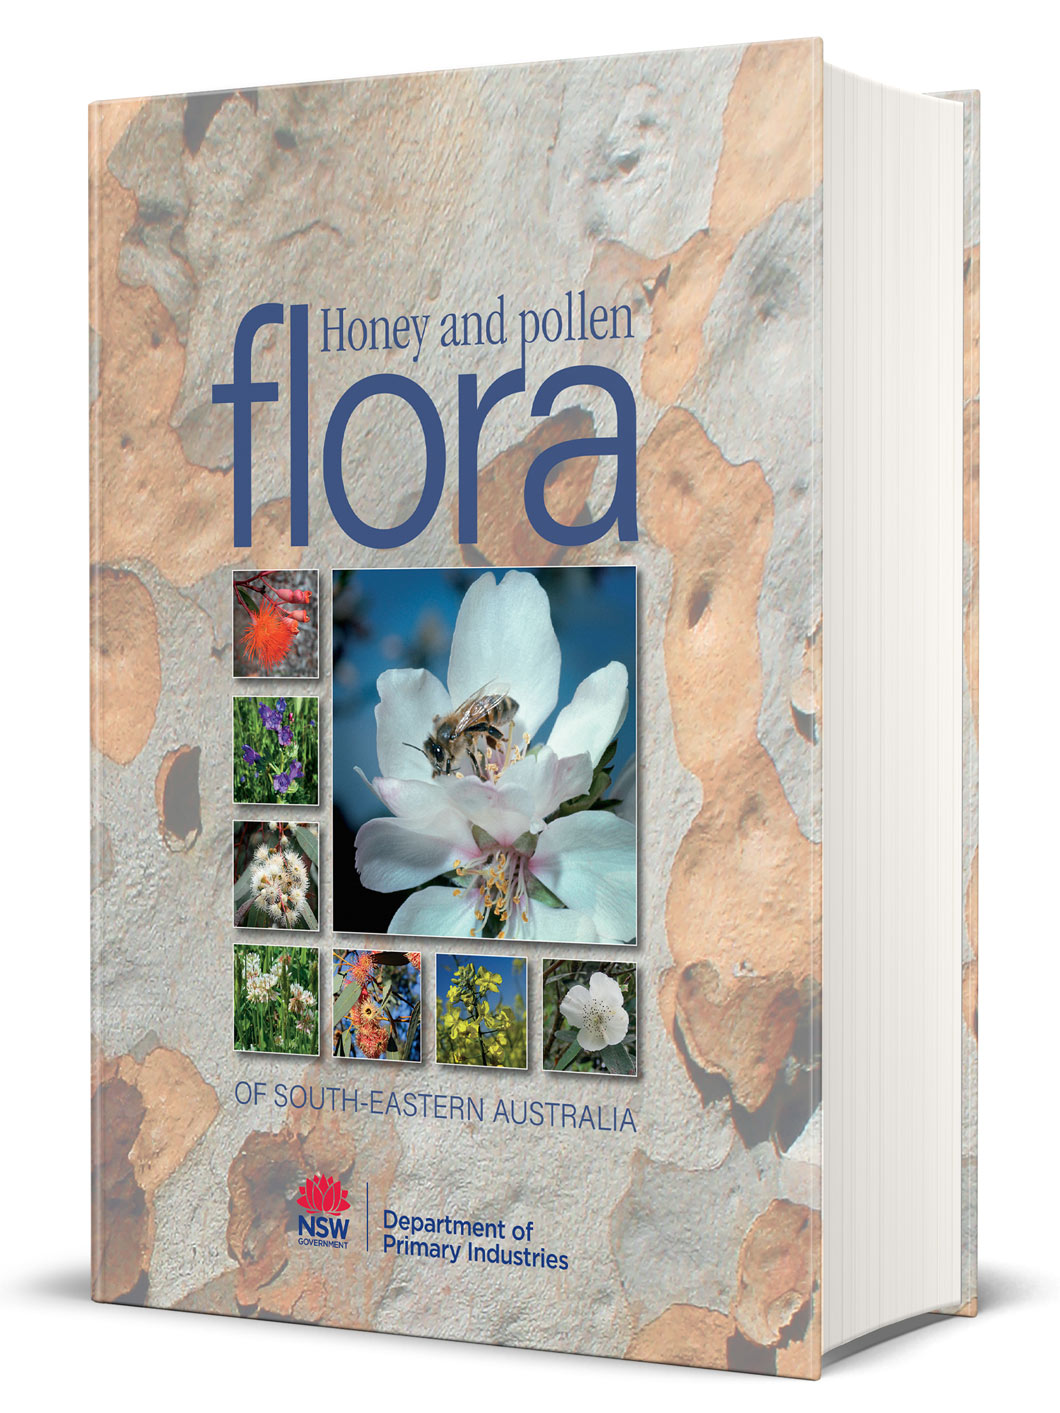 Honey and pollen flora book cover